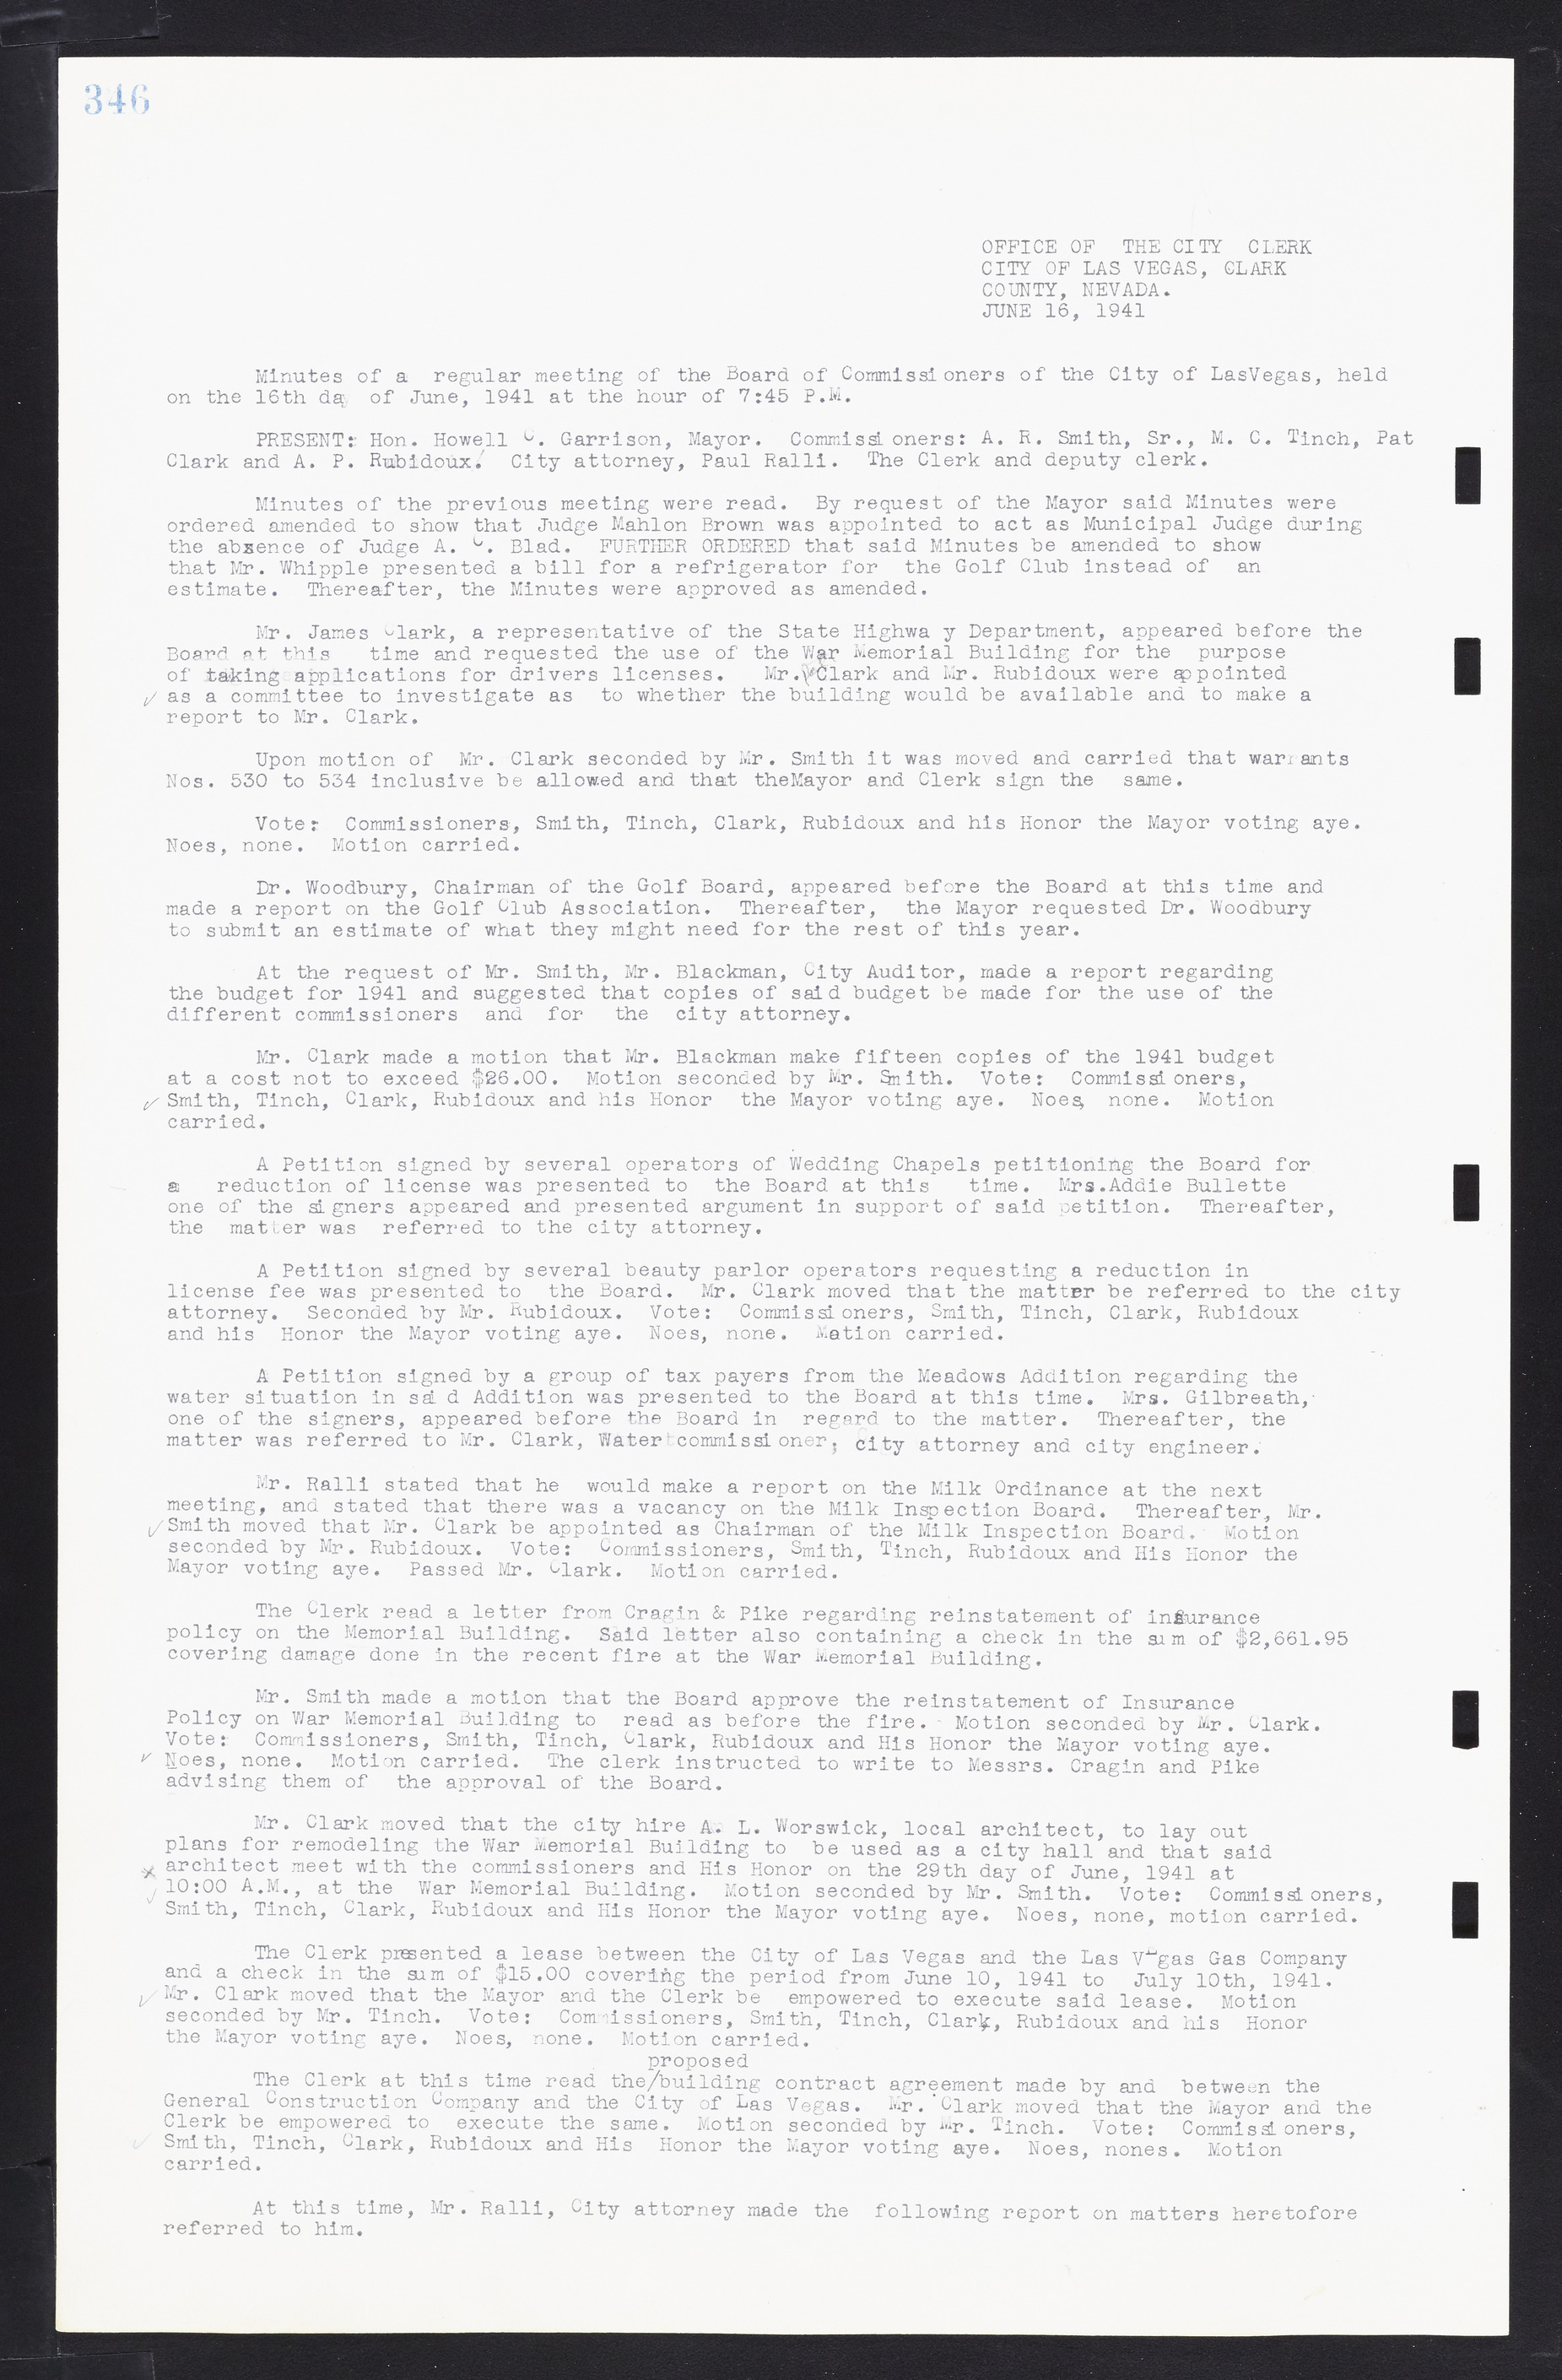 Las Vegas City Commission Minutes, February 17, 1937 to August 4, 1942, lvc000004-370